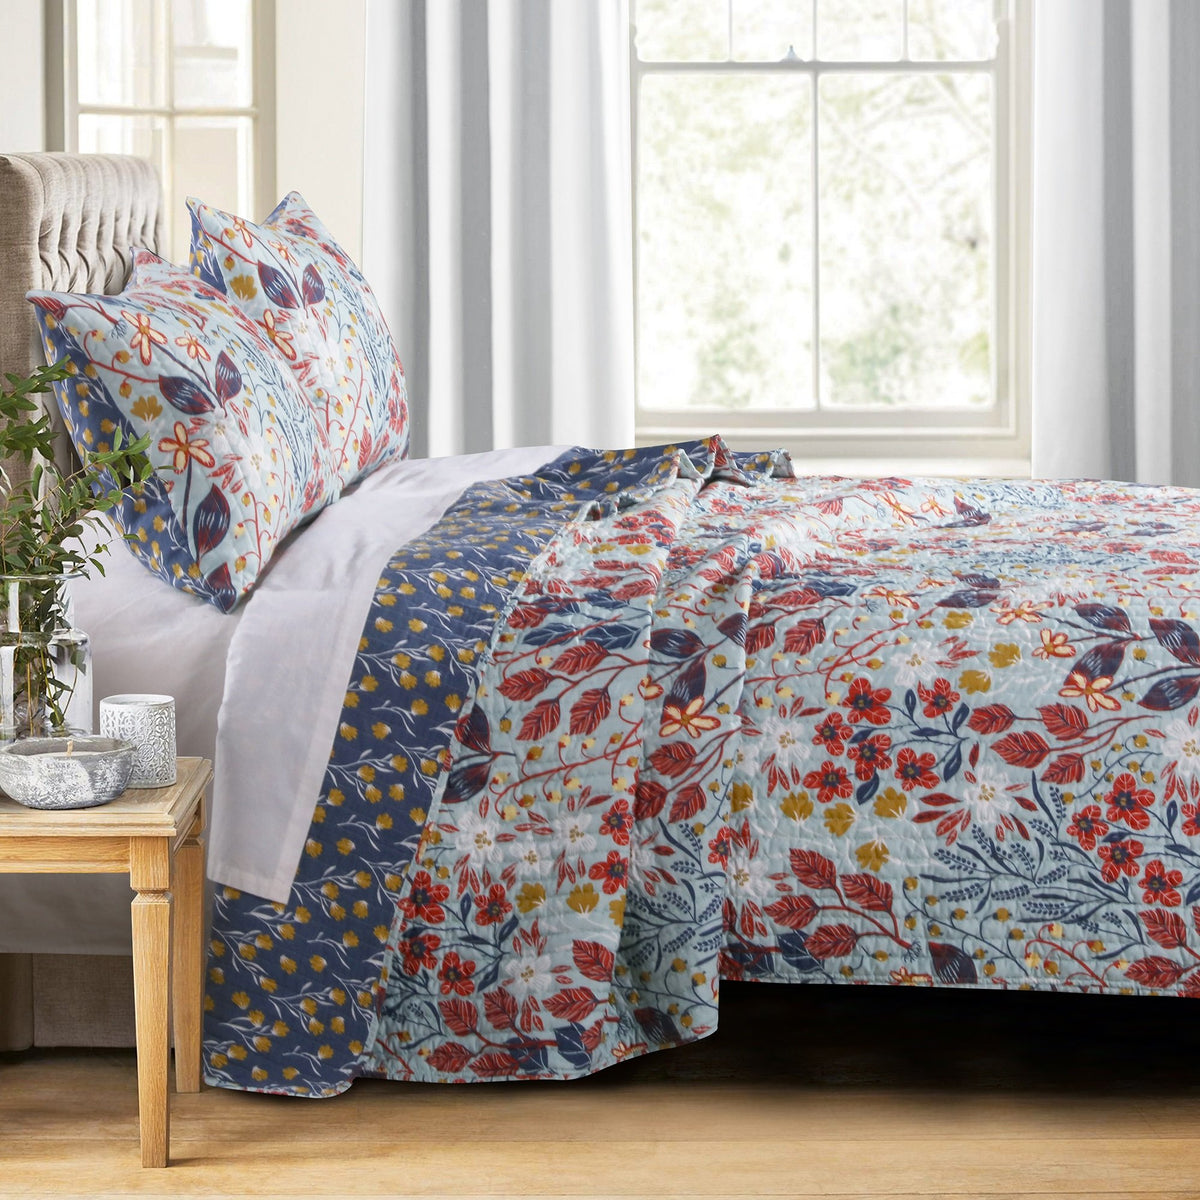 King Size 3 Piece Polyester Quilt Set with Floral Prints, Multicolor - BM218897